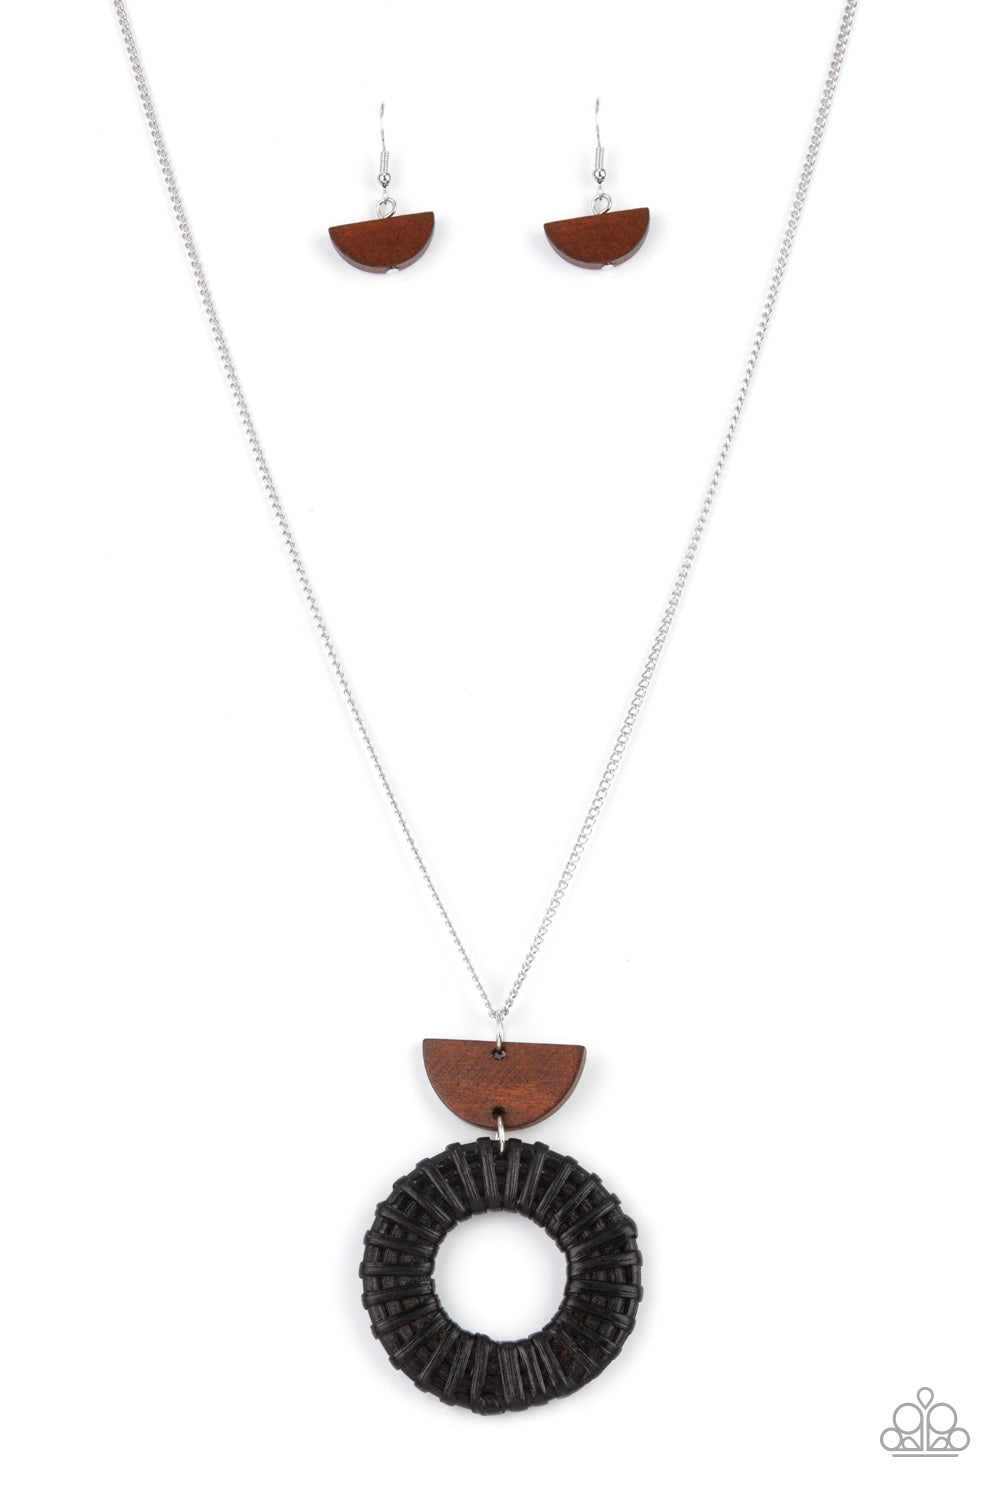 Homespun Stylist - Black & Brown Wood Necklace Set - Princess Glam Shop